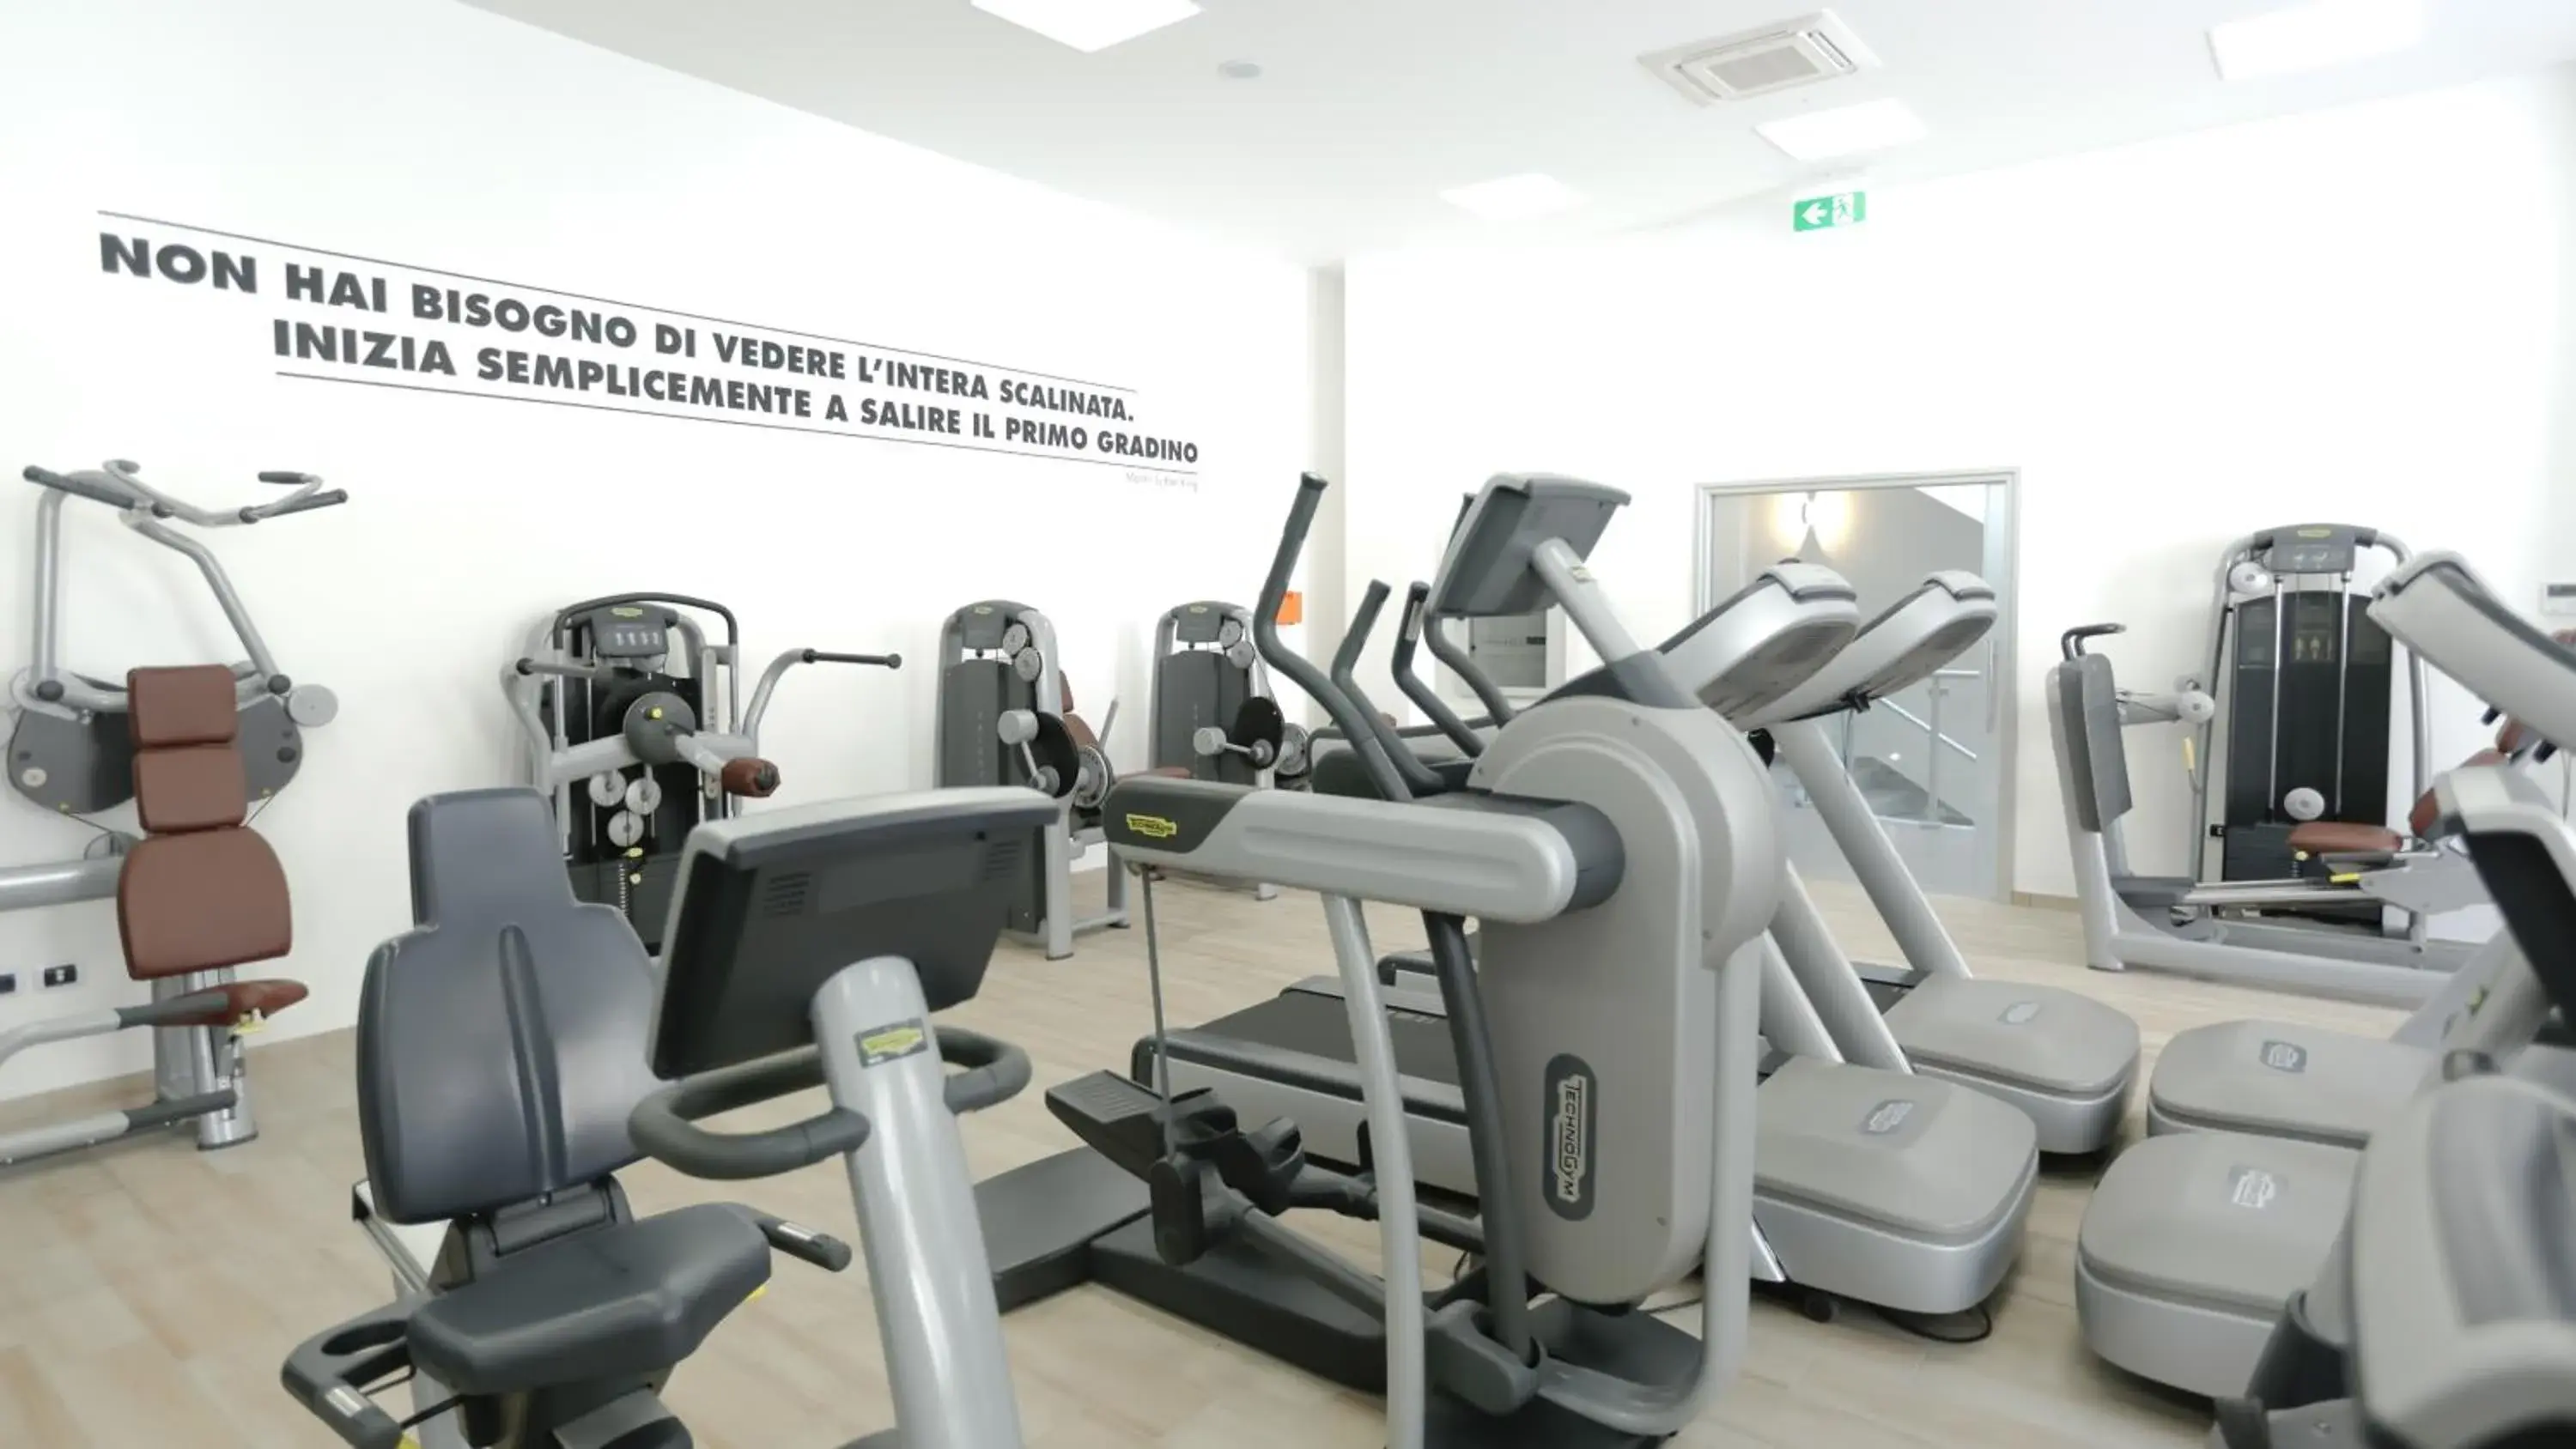 Fitness centre/facilities, Fitness Center/Facilities in Ecumano Space